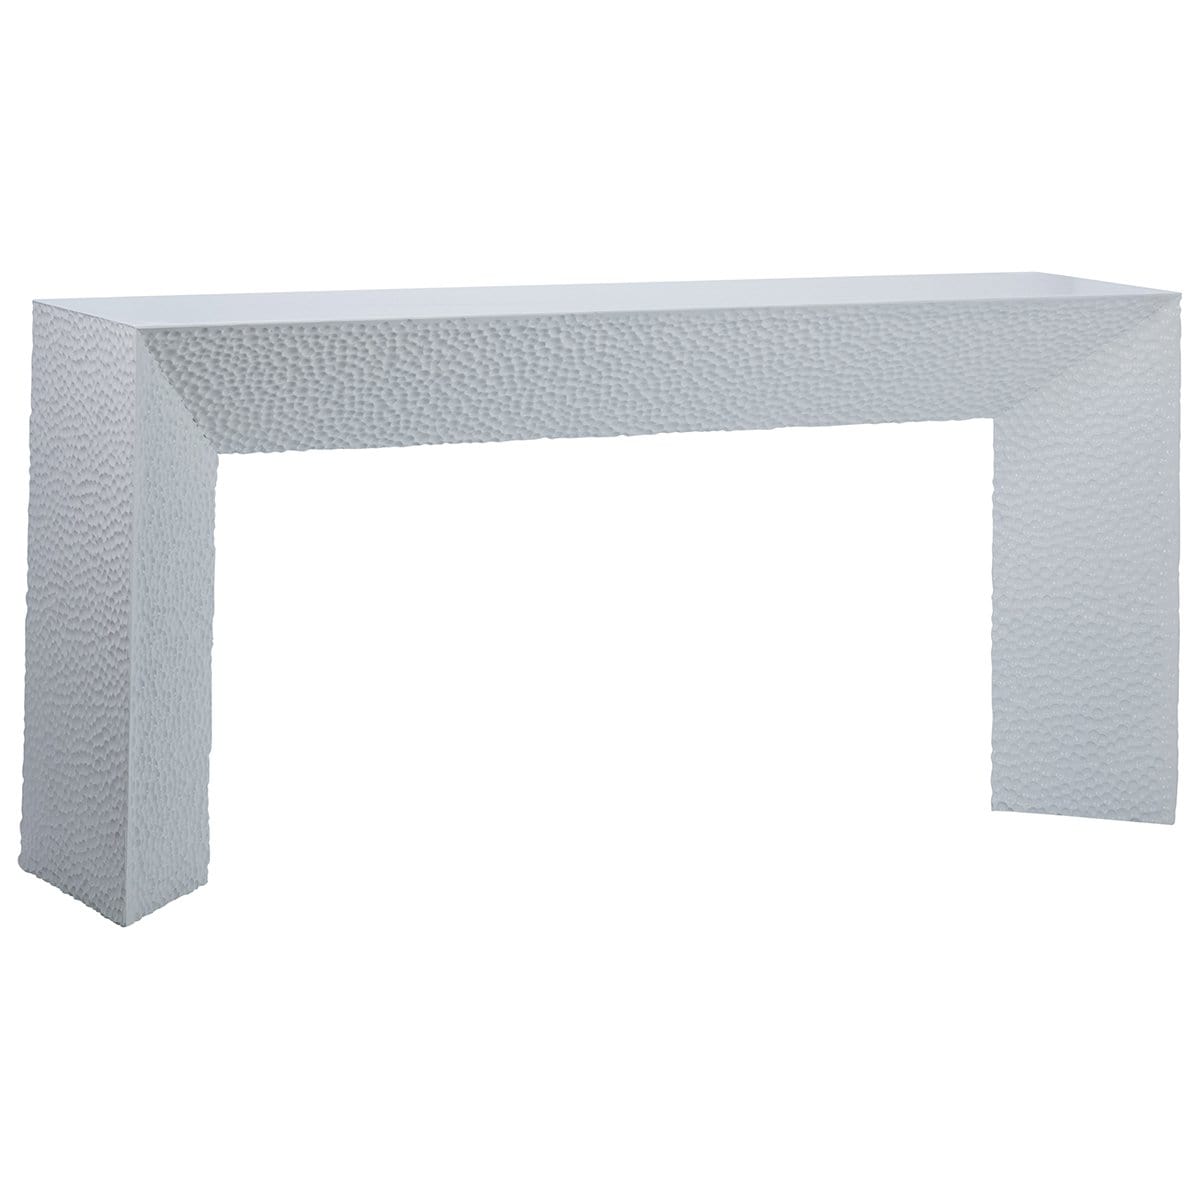 Dovetail Orbina Console Table Furniture dovetail-DOV10365